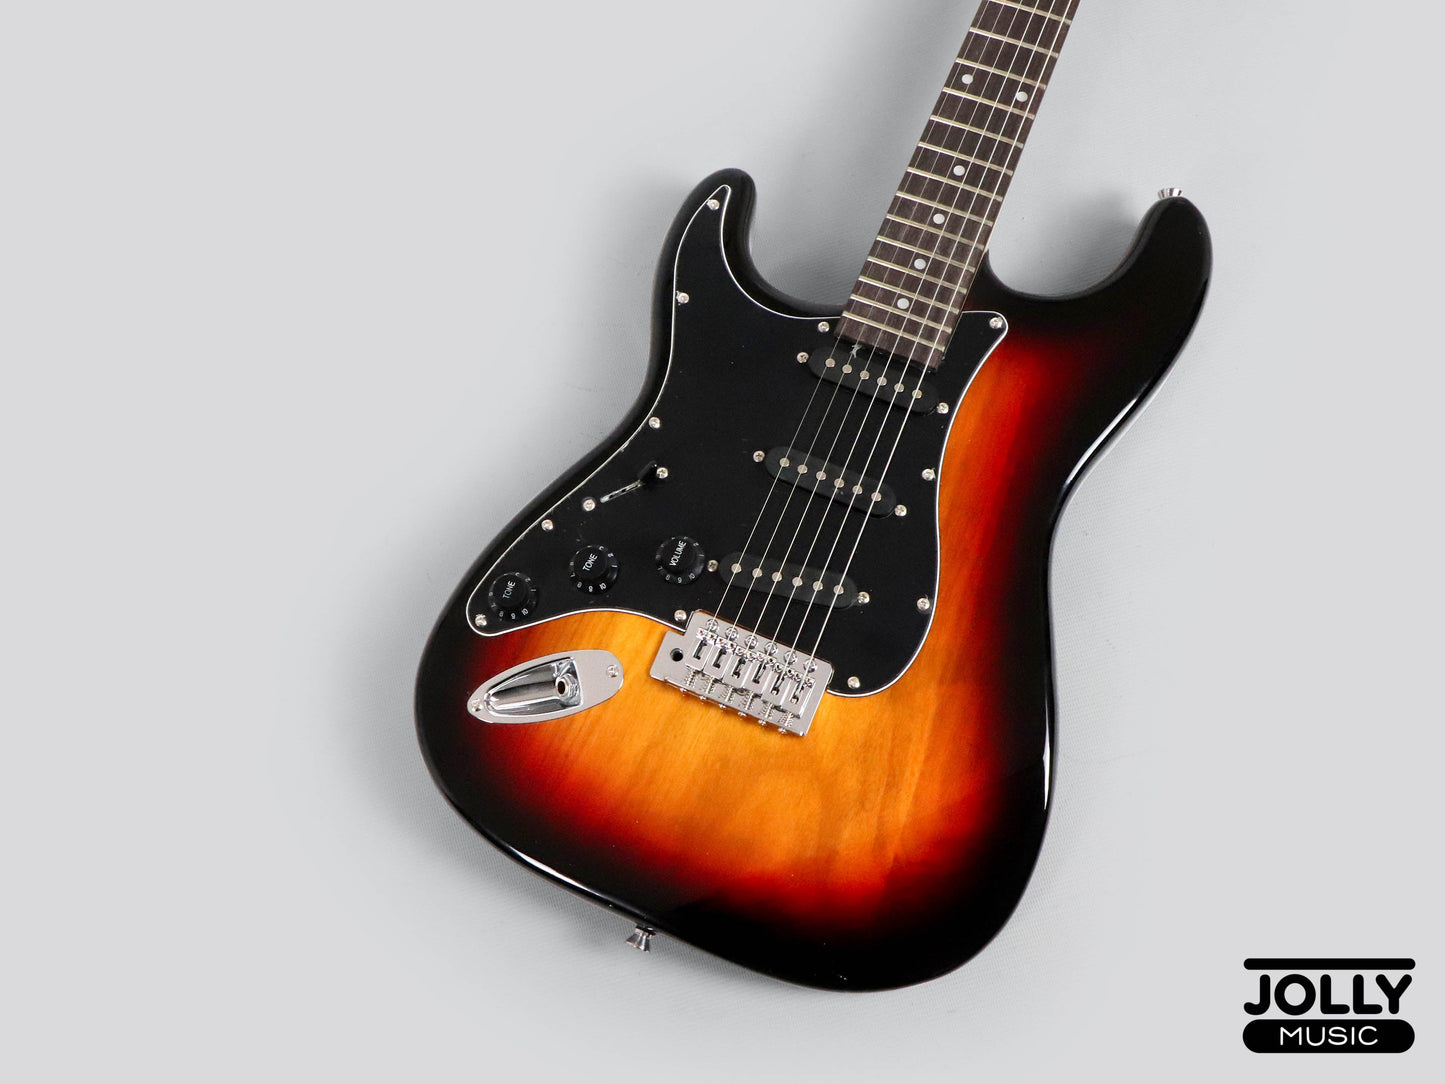 JCraft S-1 LEFT HAND S-Style Electric Guitar with Gigbag - Sunburst